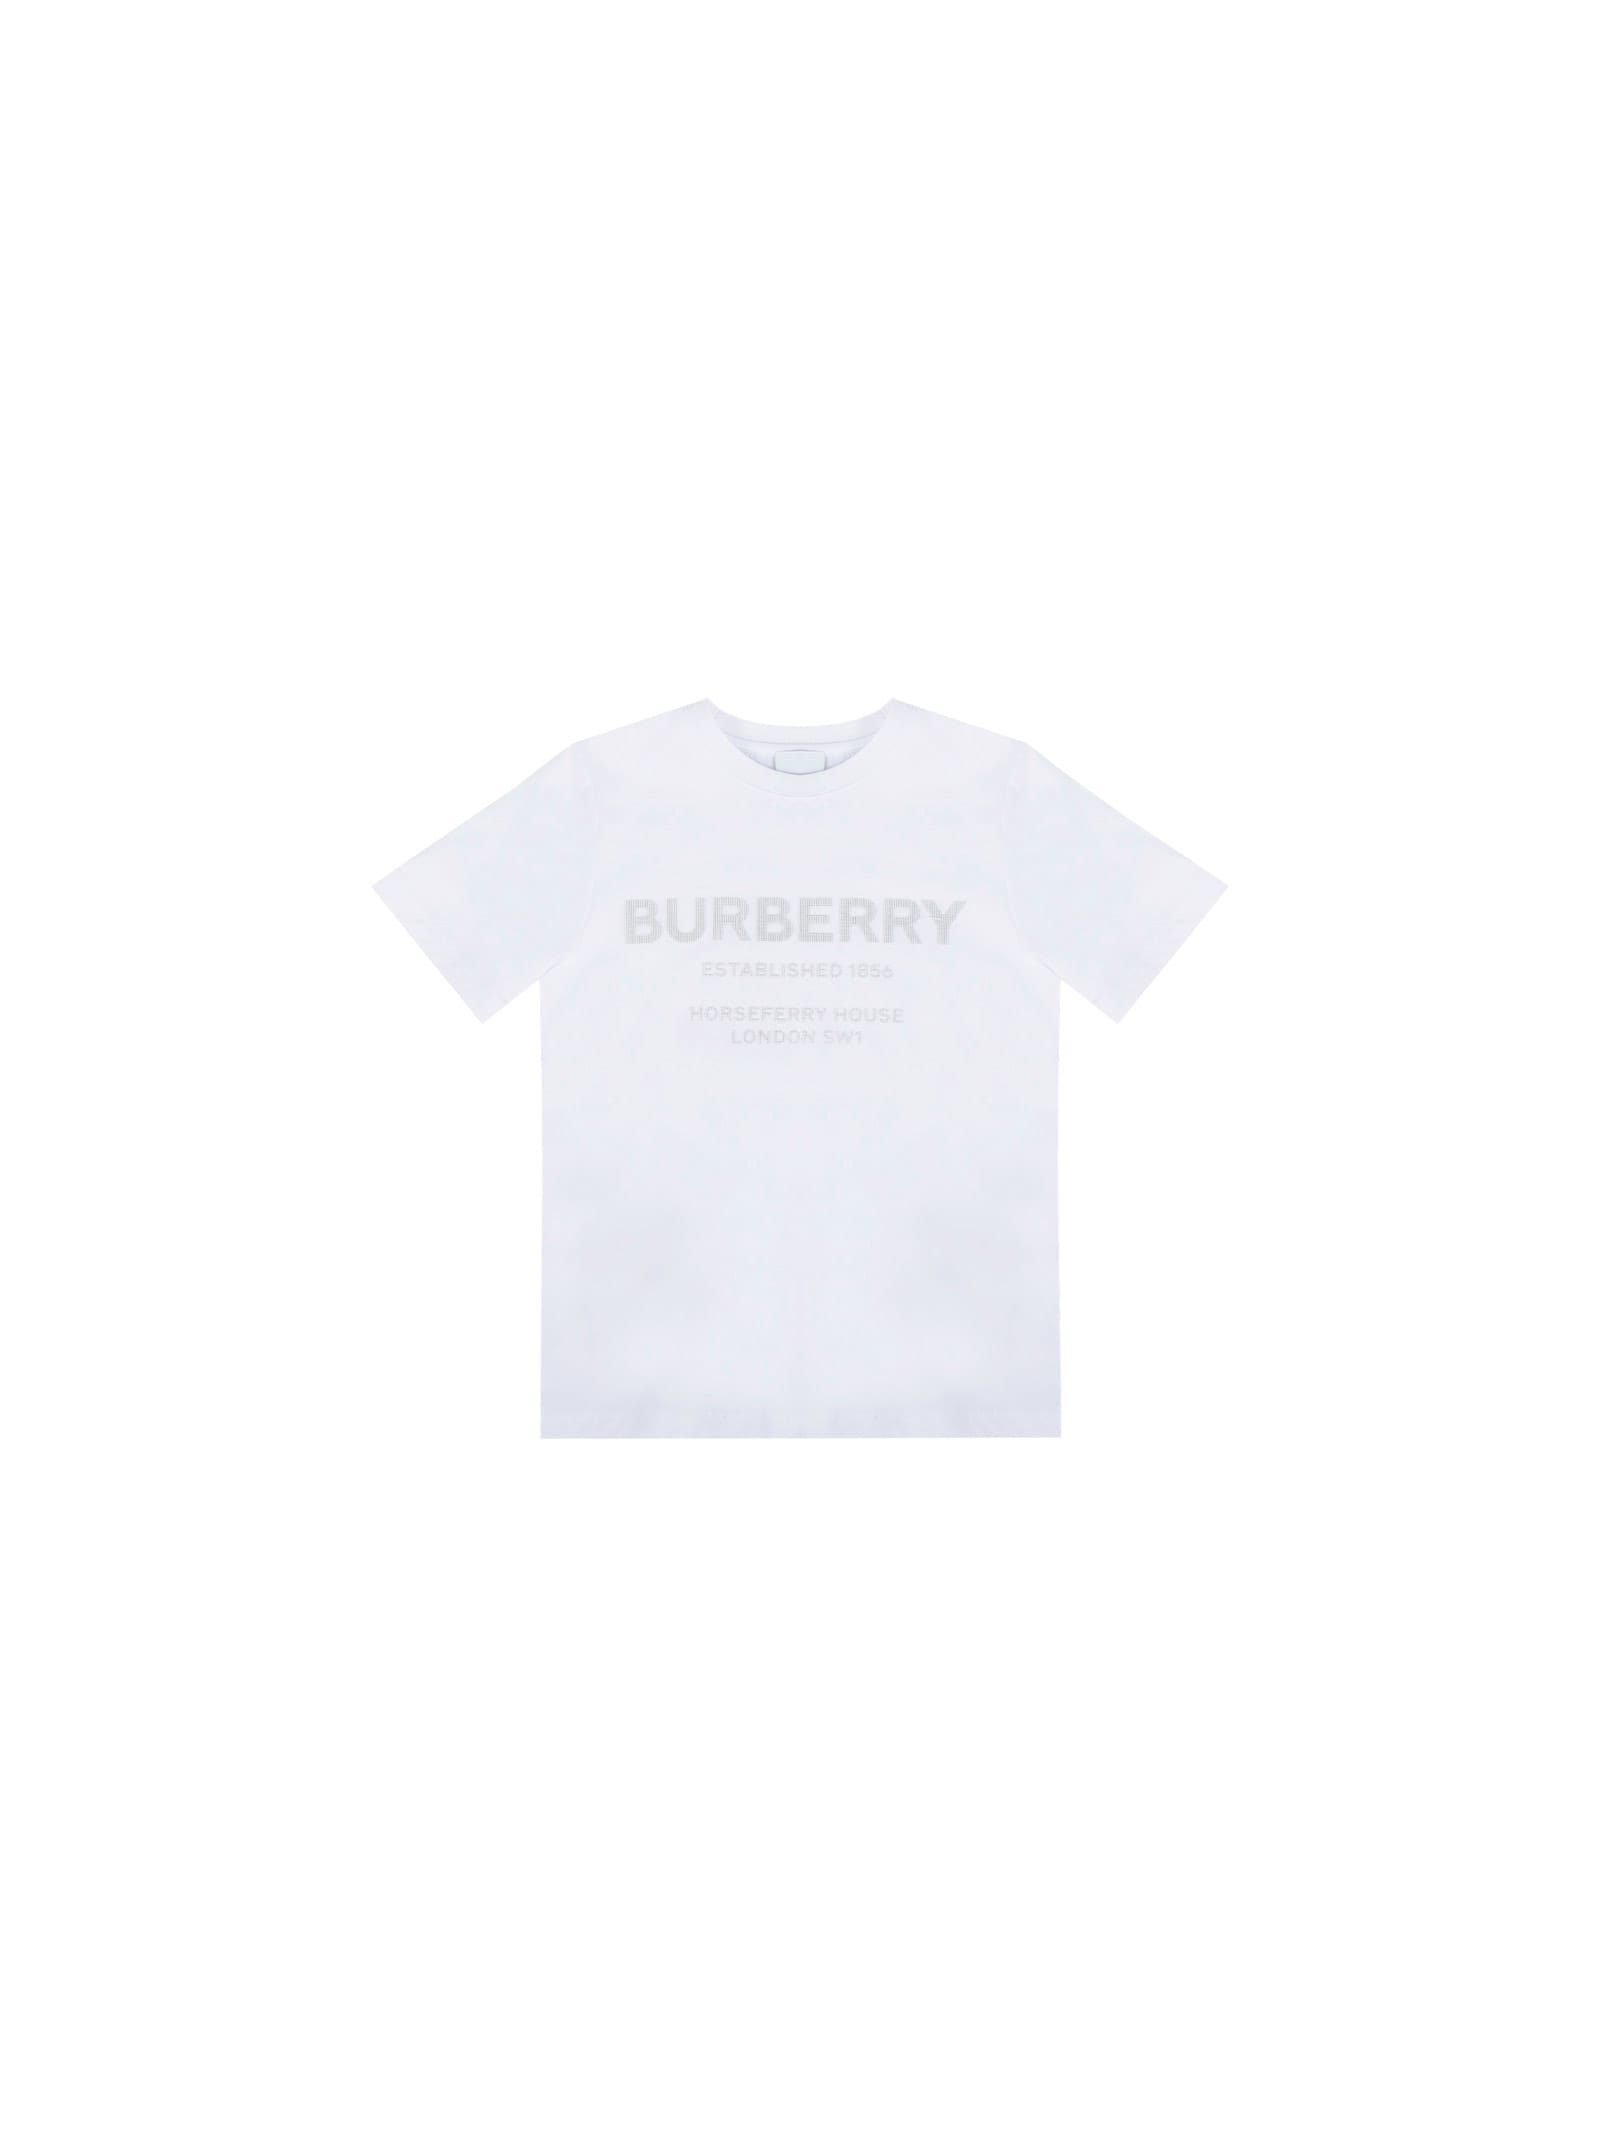 Burberry Bristle T-shirt For Boys